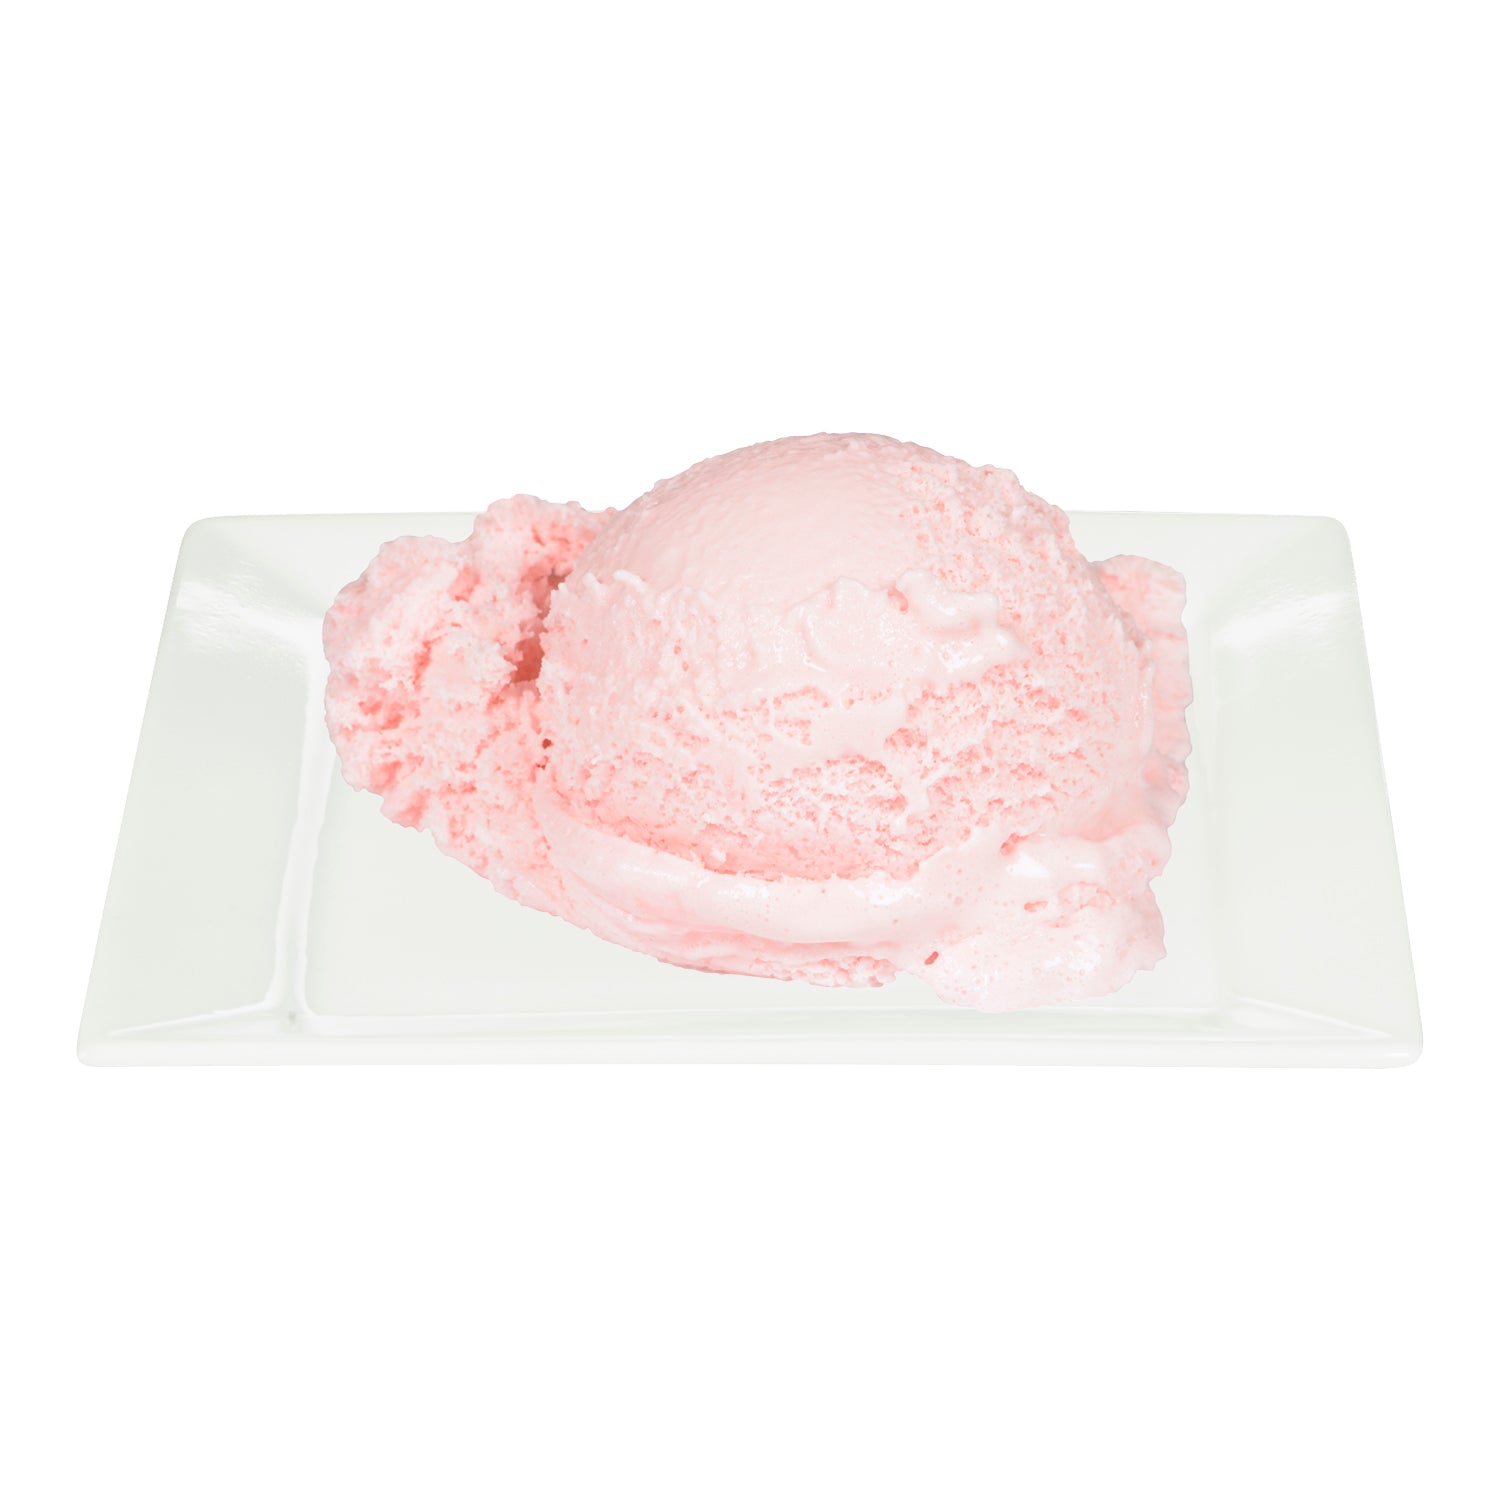 Chapman's Strawberry Ice Cream 11.4l [$0.49/serving]